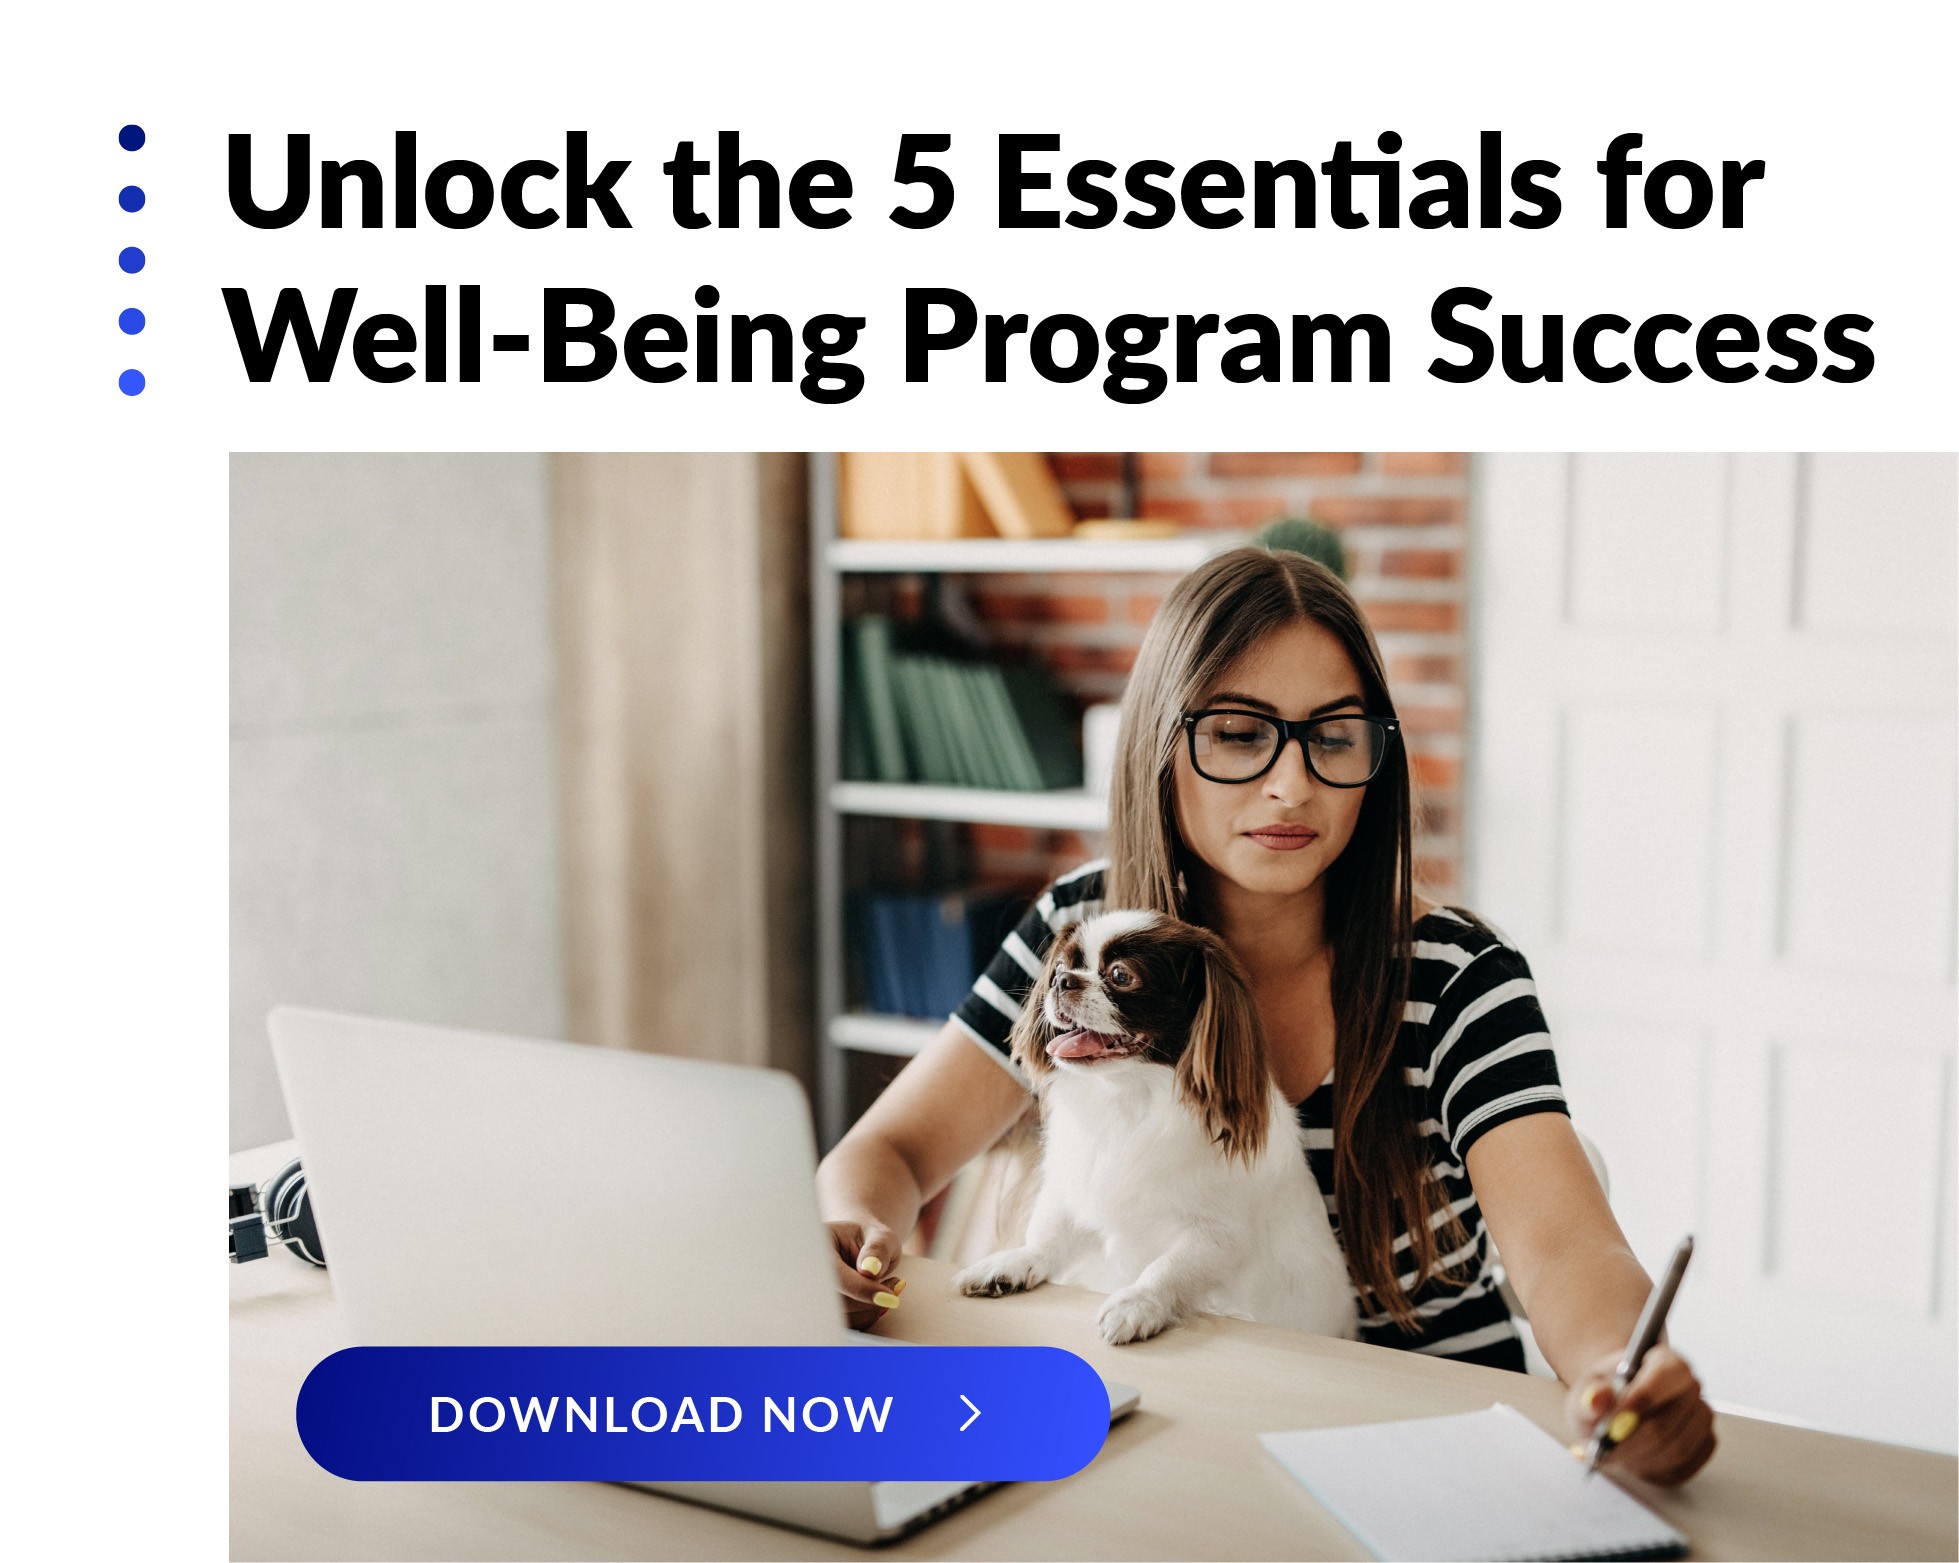 Unlock the 5 Essentials for Well-Being Program Success pop-up